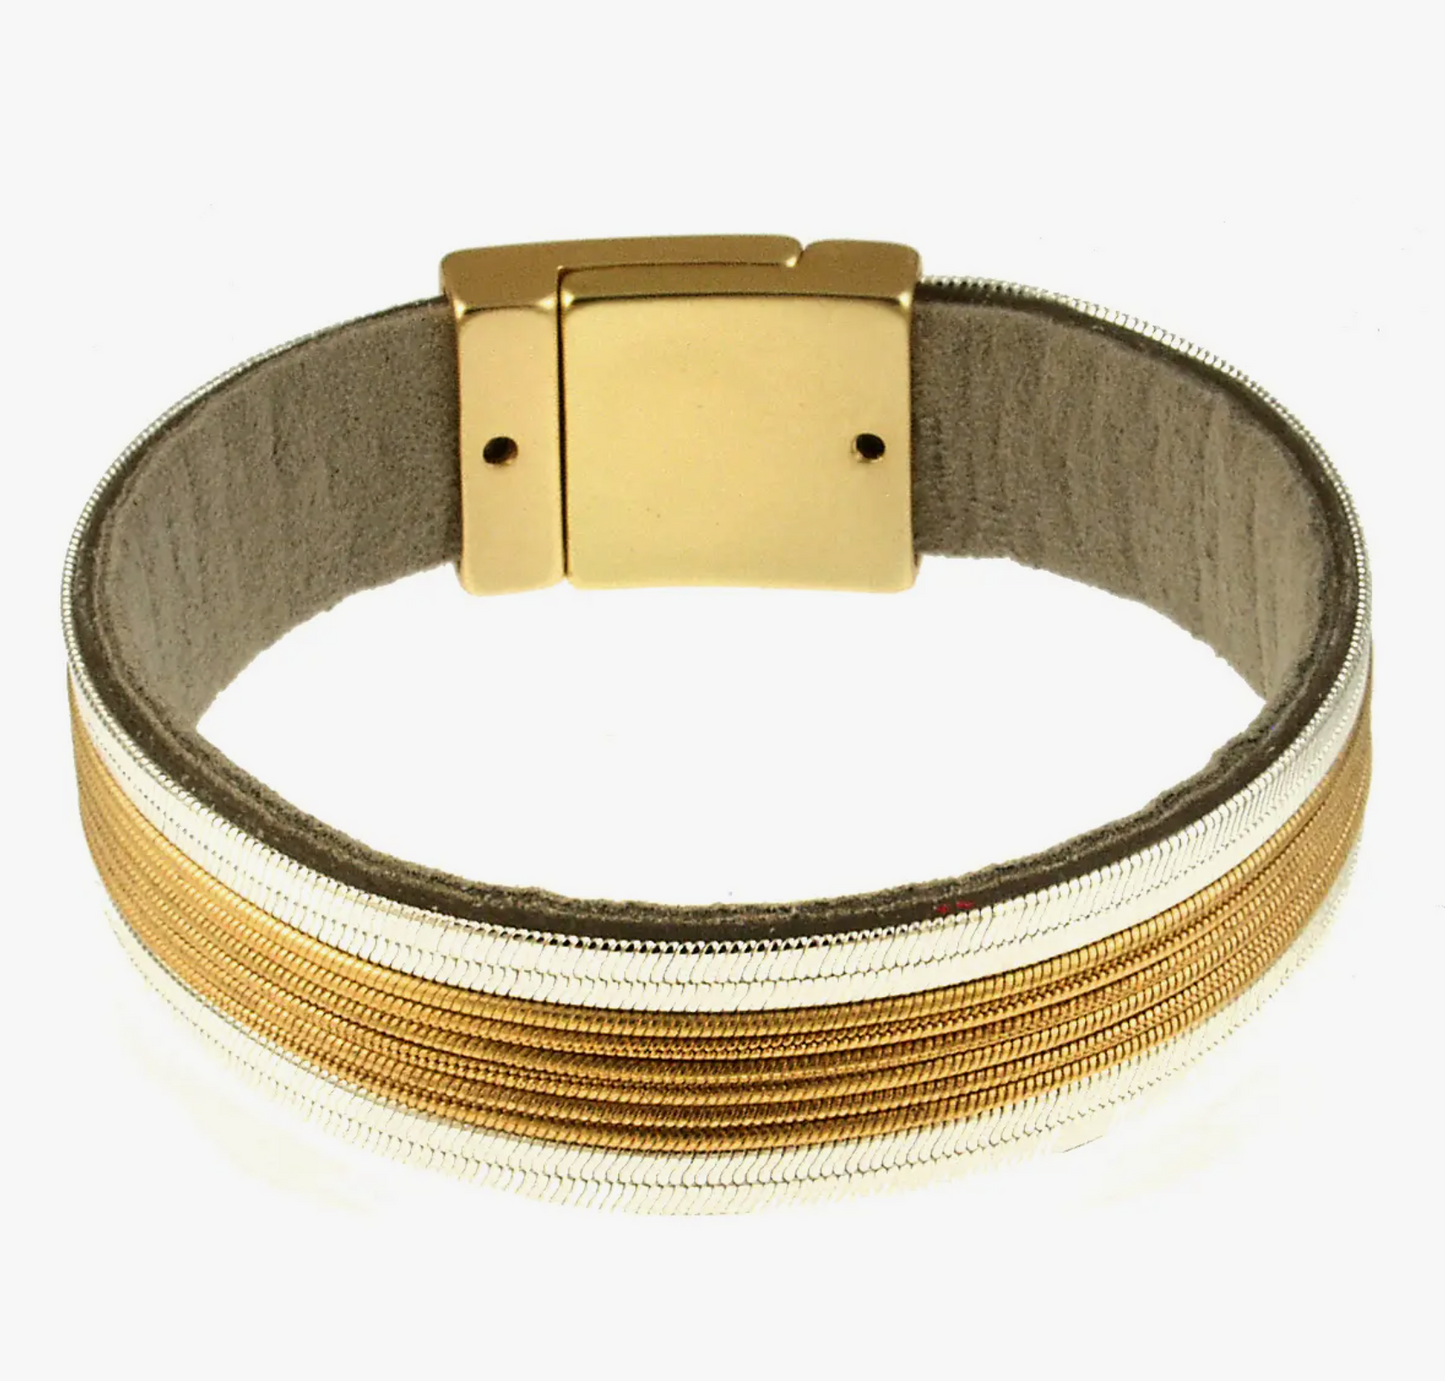 Silver & Gold Chain Bracelet